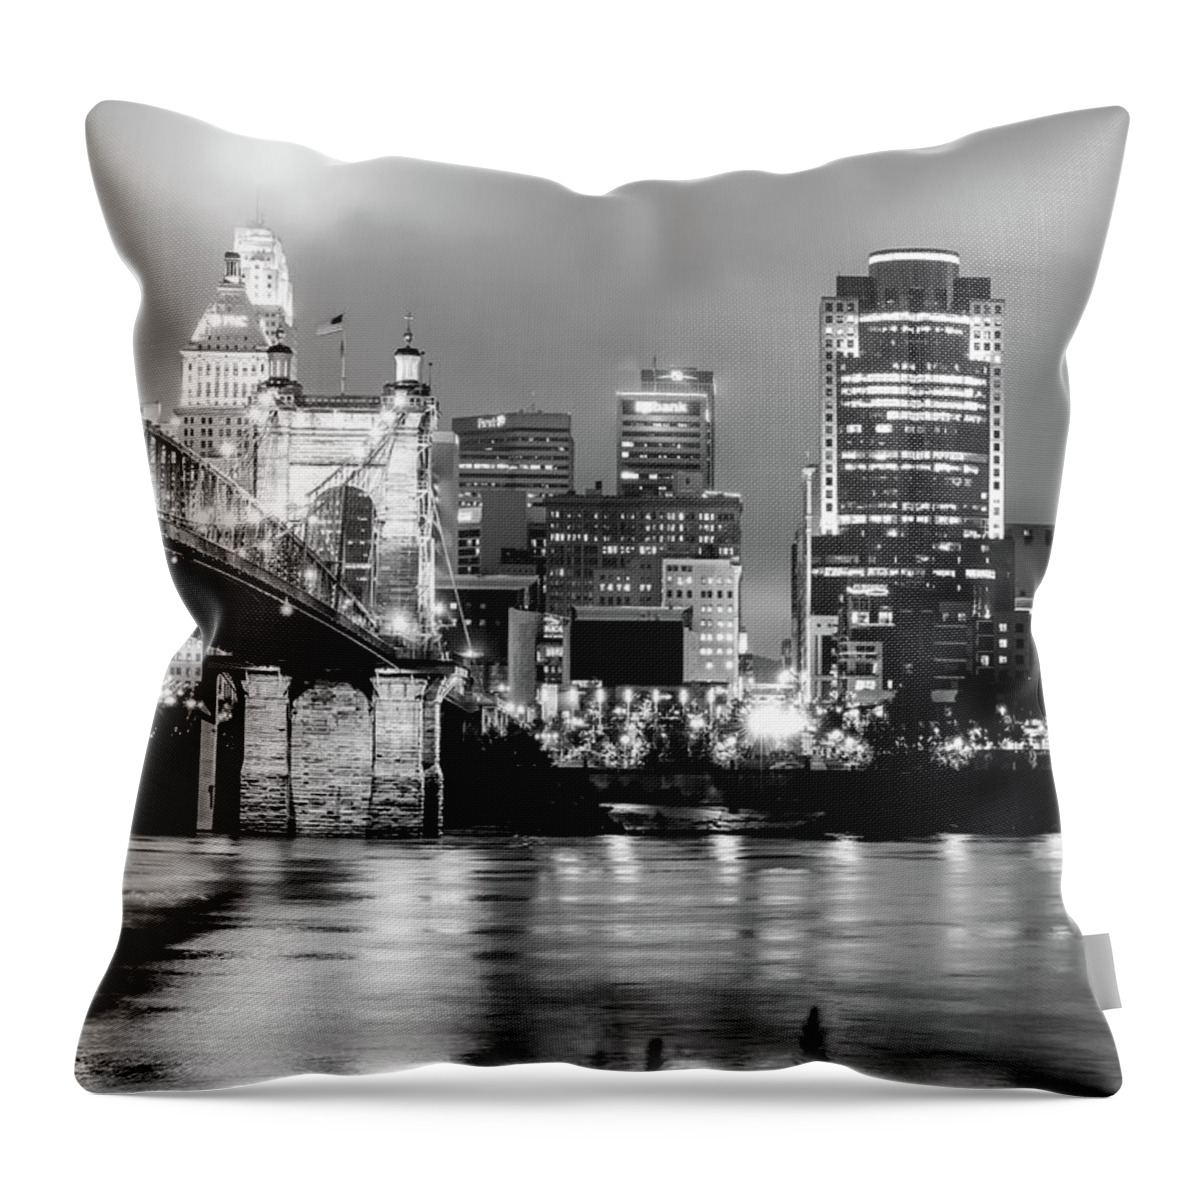 Cincinnati Skyline Throw Pillow featuring the photograph Cincinnati Ohio Skyline and the Ohio River - Black and White by Gregory Ballos